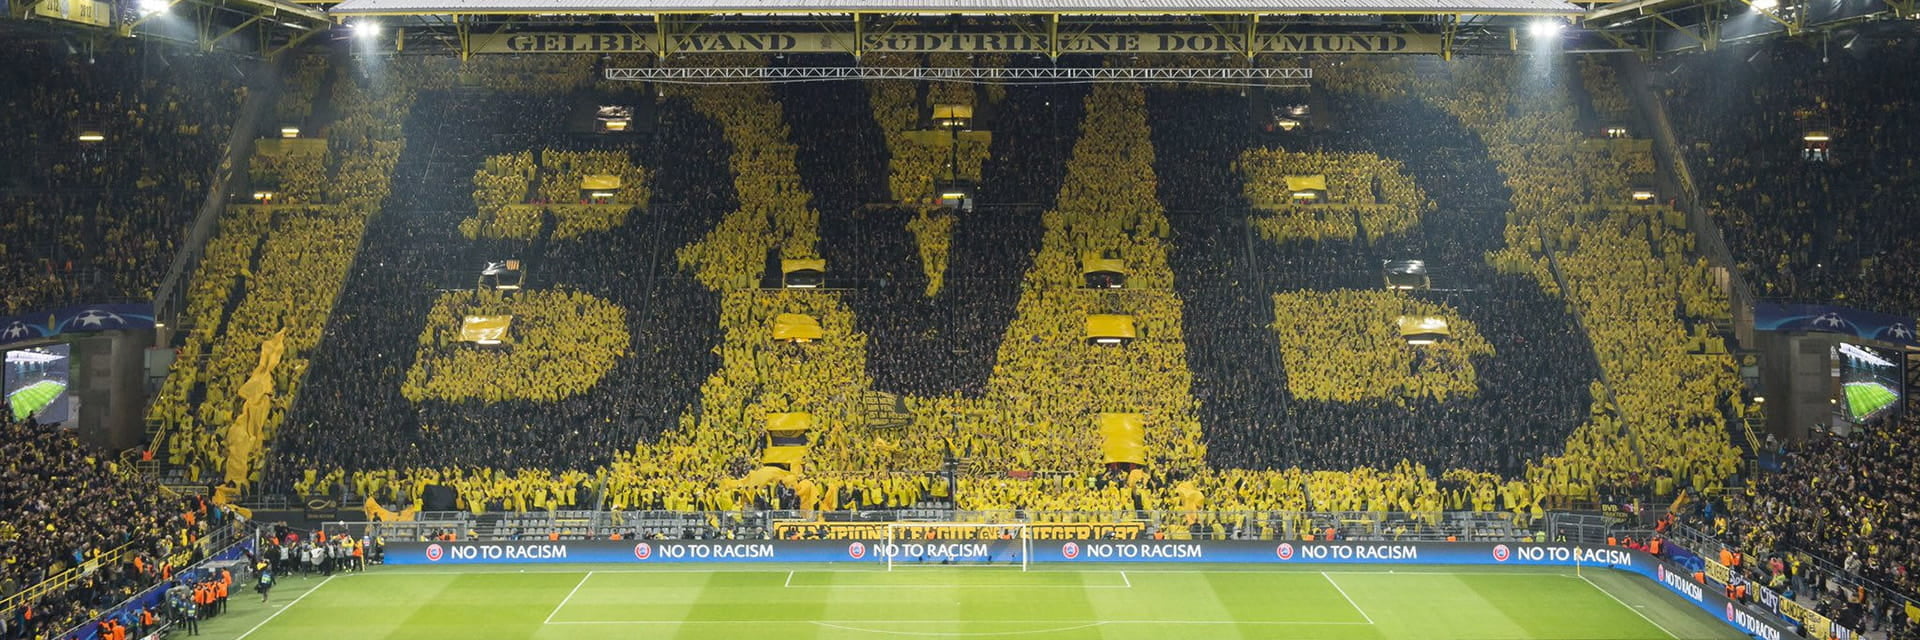 Borussia Dortmund - VfL Bochum, 6 noviembreen 15:30